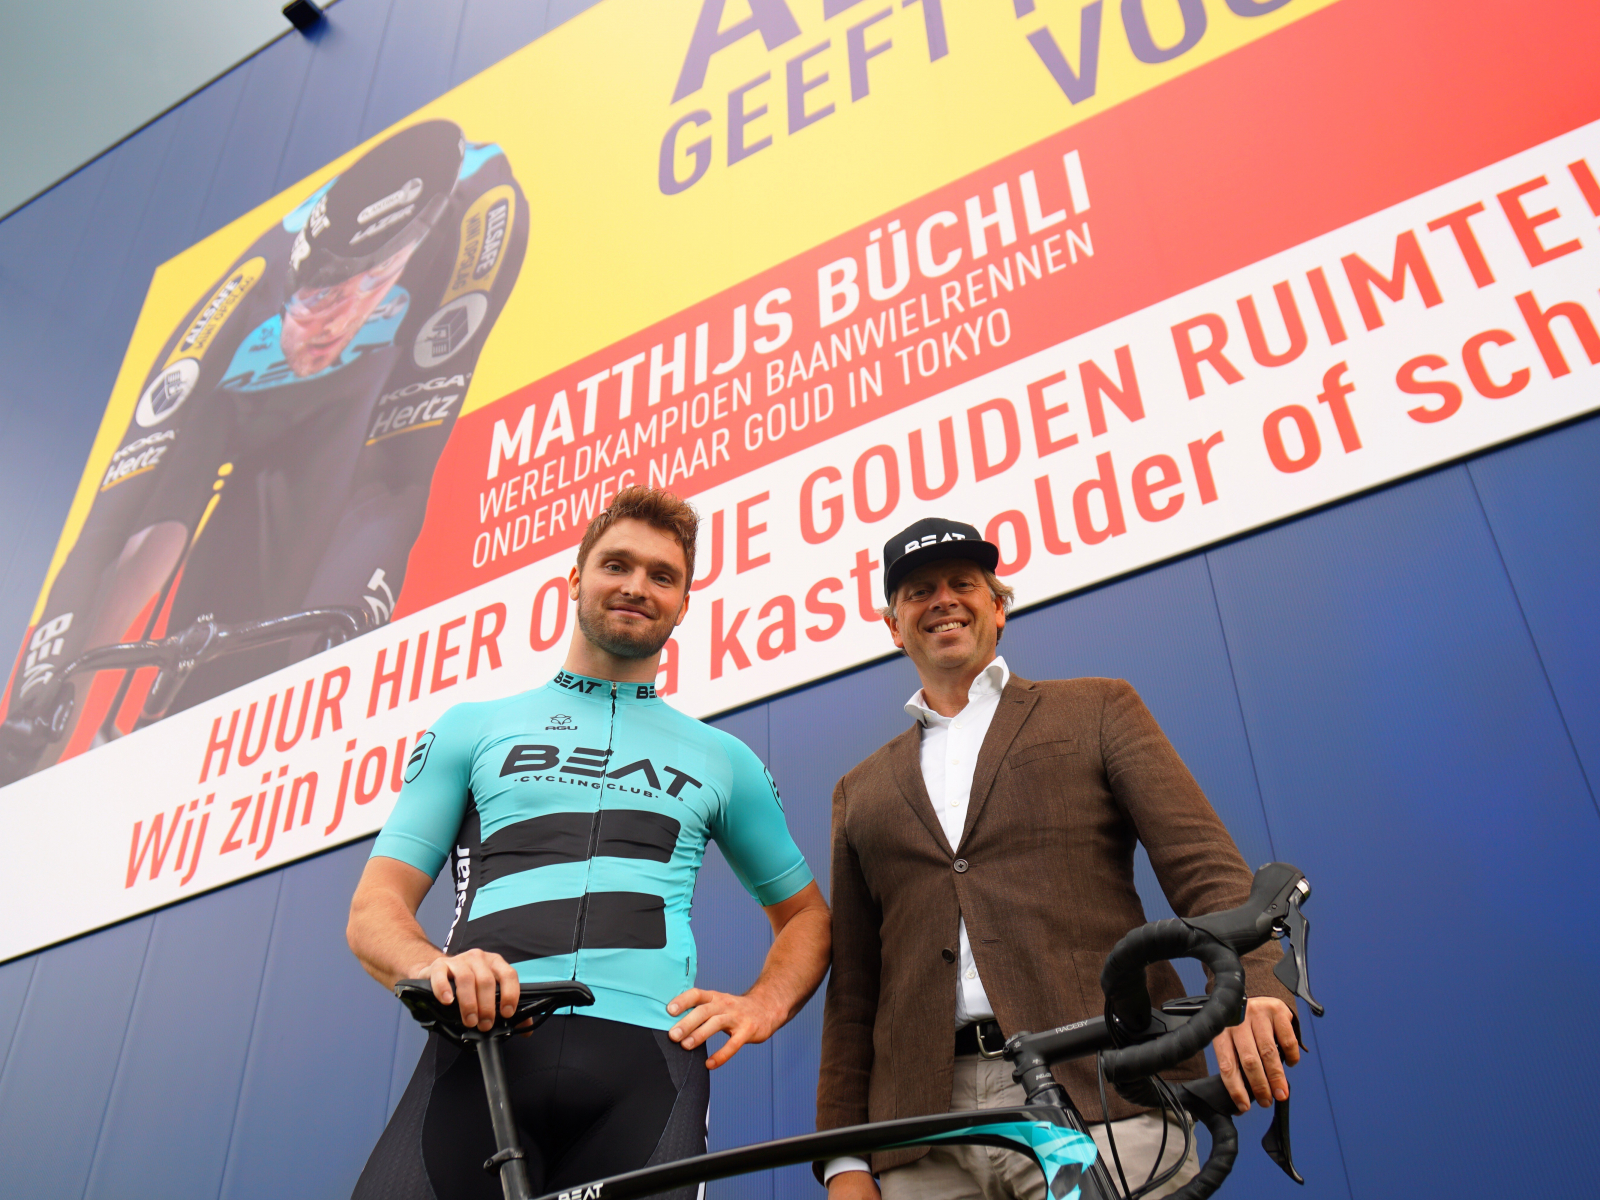 ALLSAFE geeft Matthijs Büchli ruimte voor olympisch goud